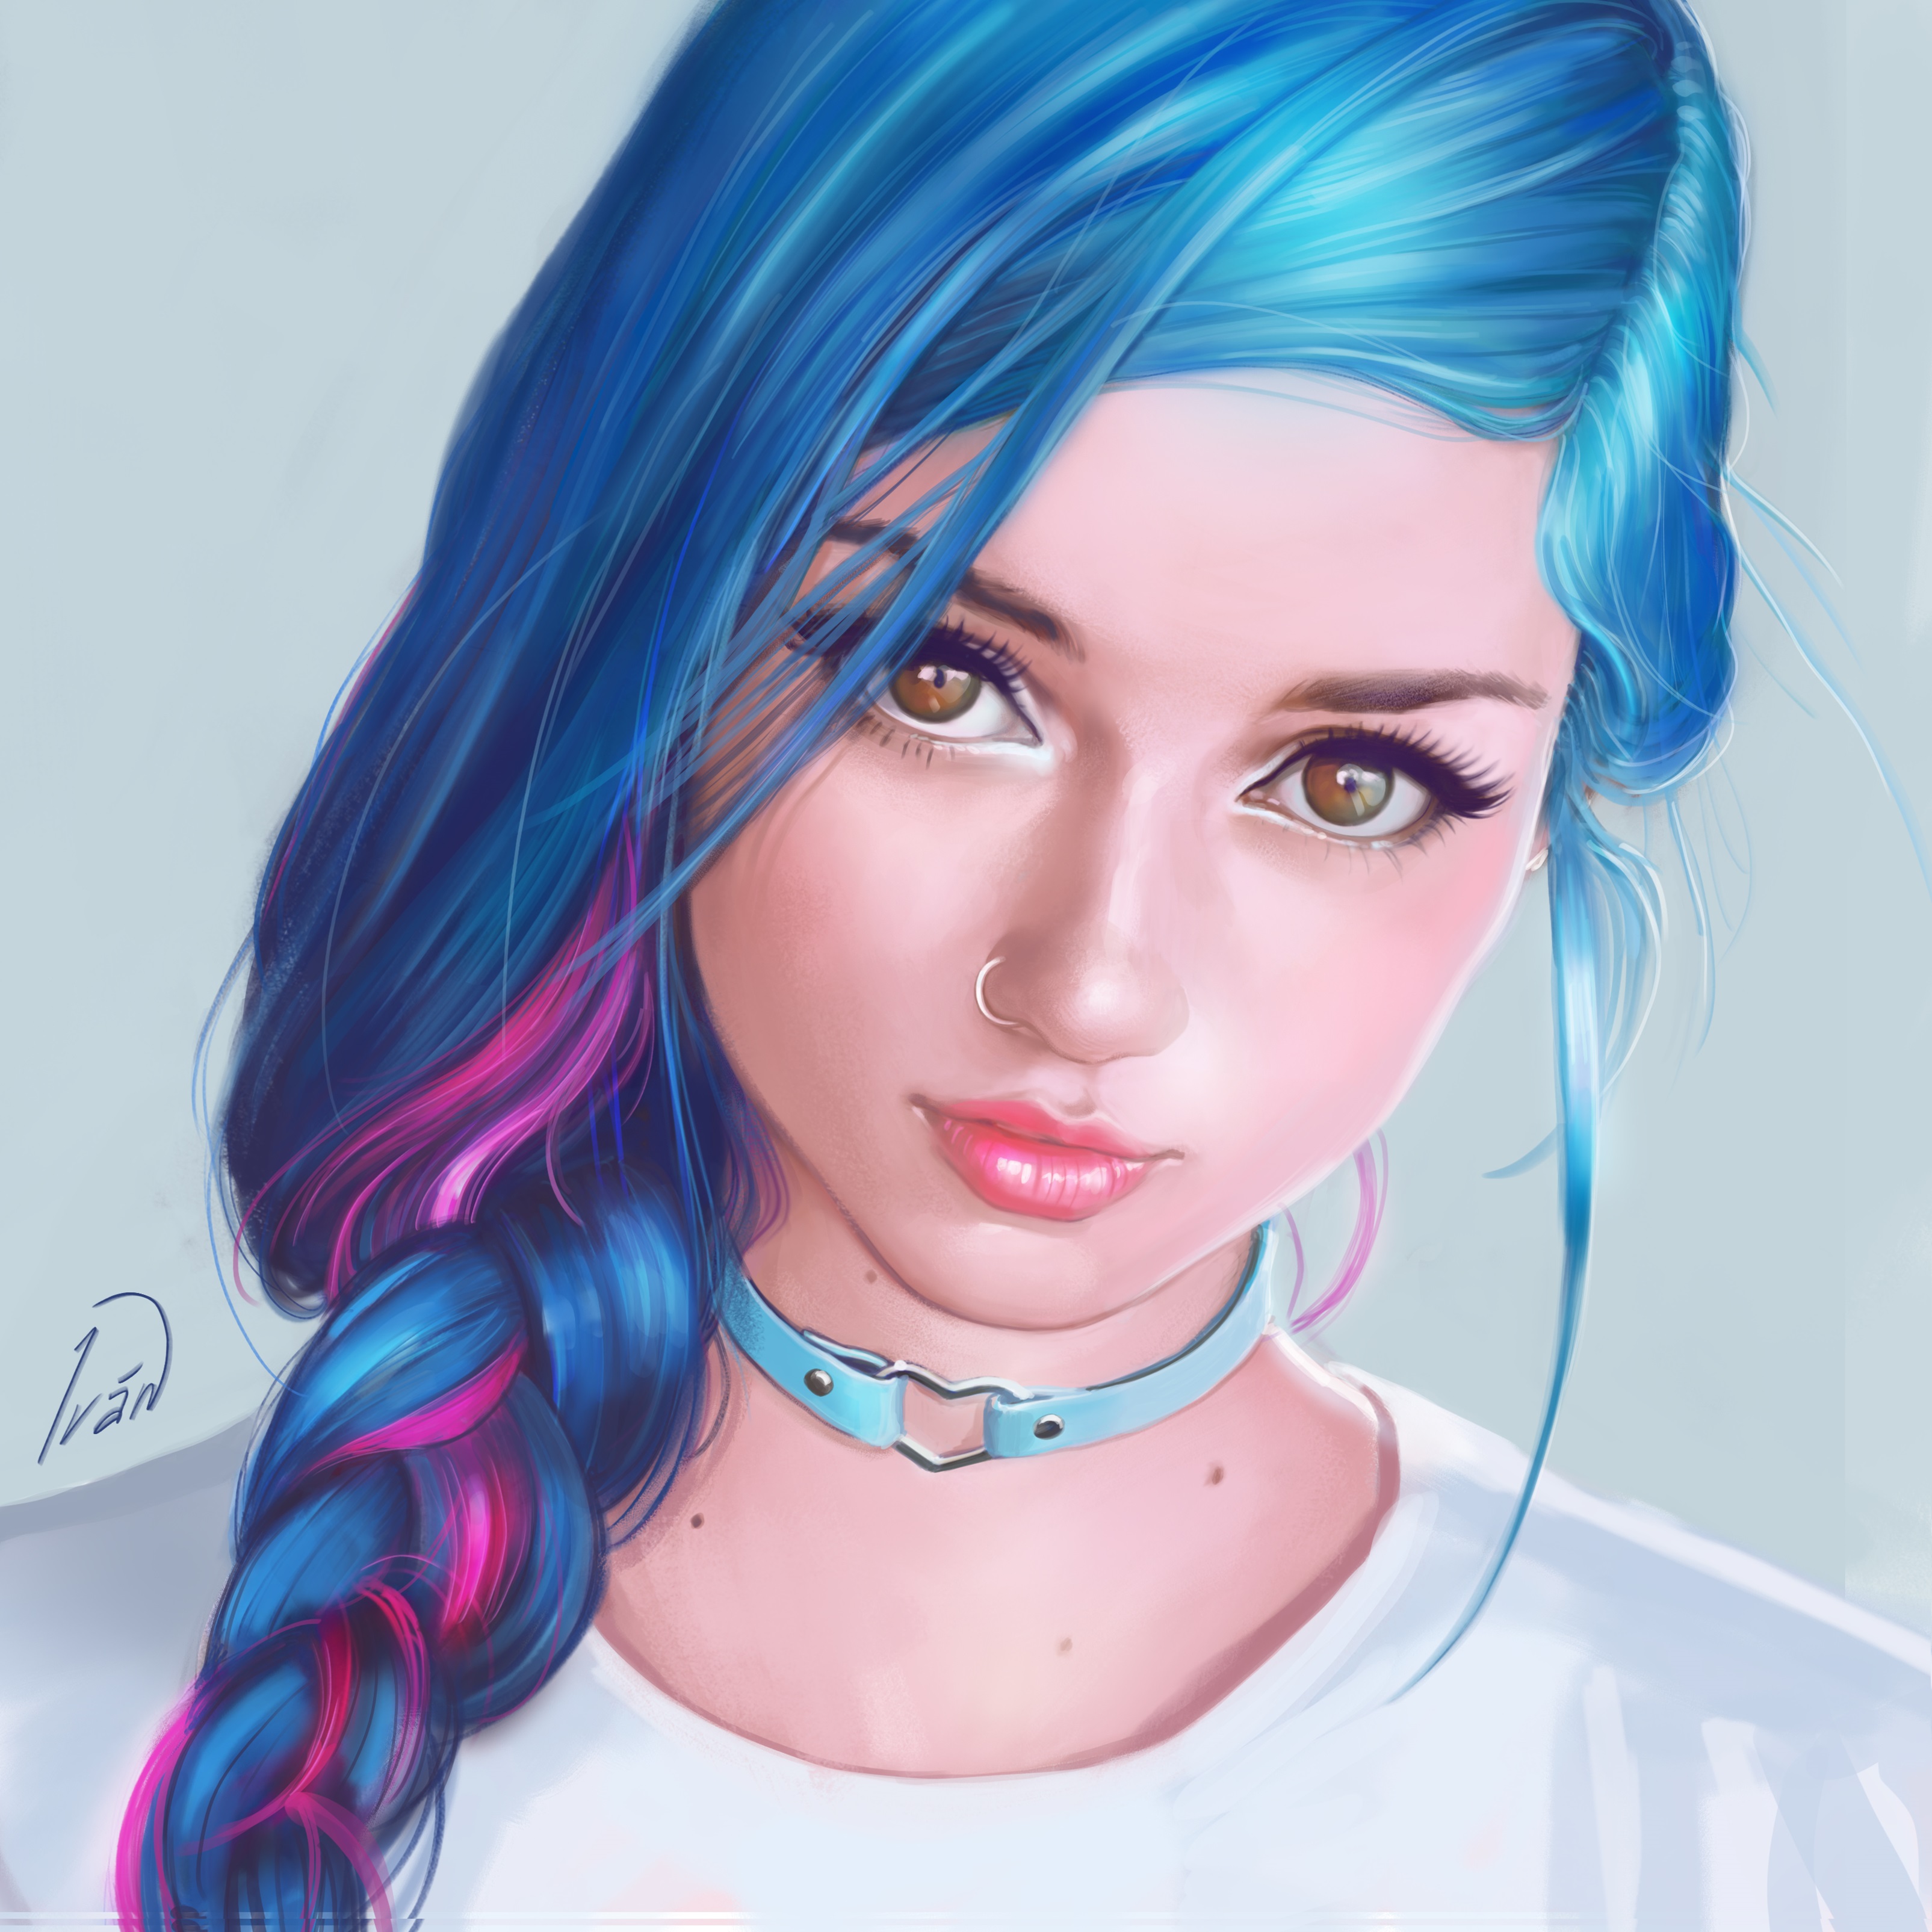 Digital Art Women Illustration Portrait Blue Hair Artwork Vexel Light Blue Braids 3210x3210